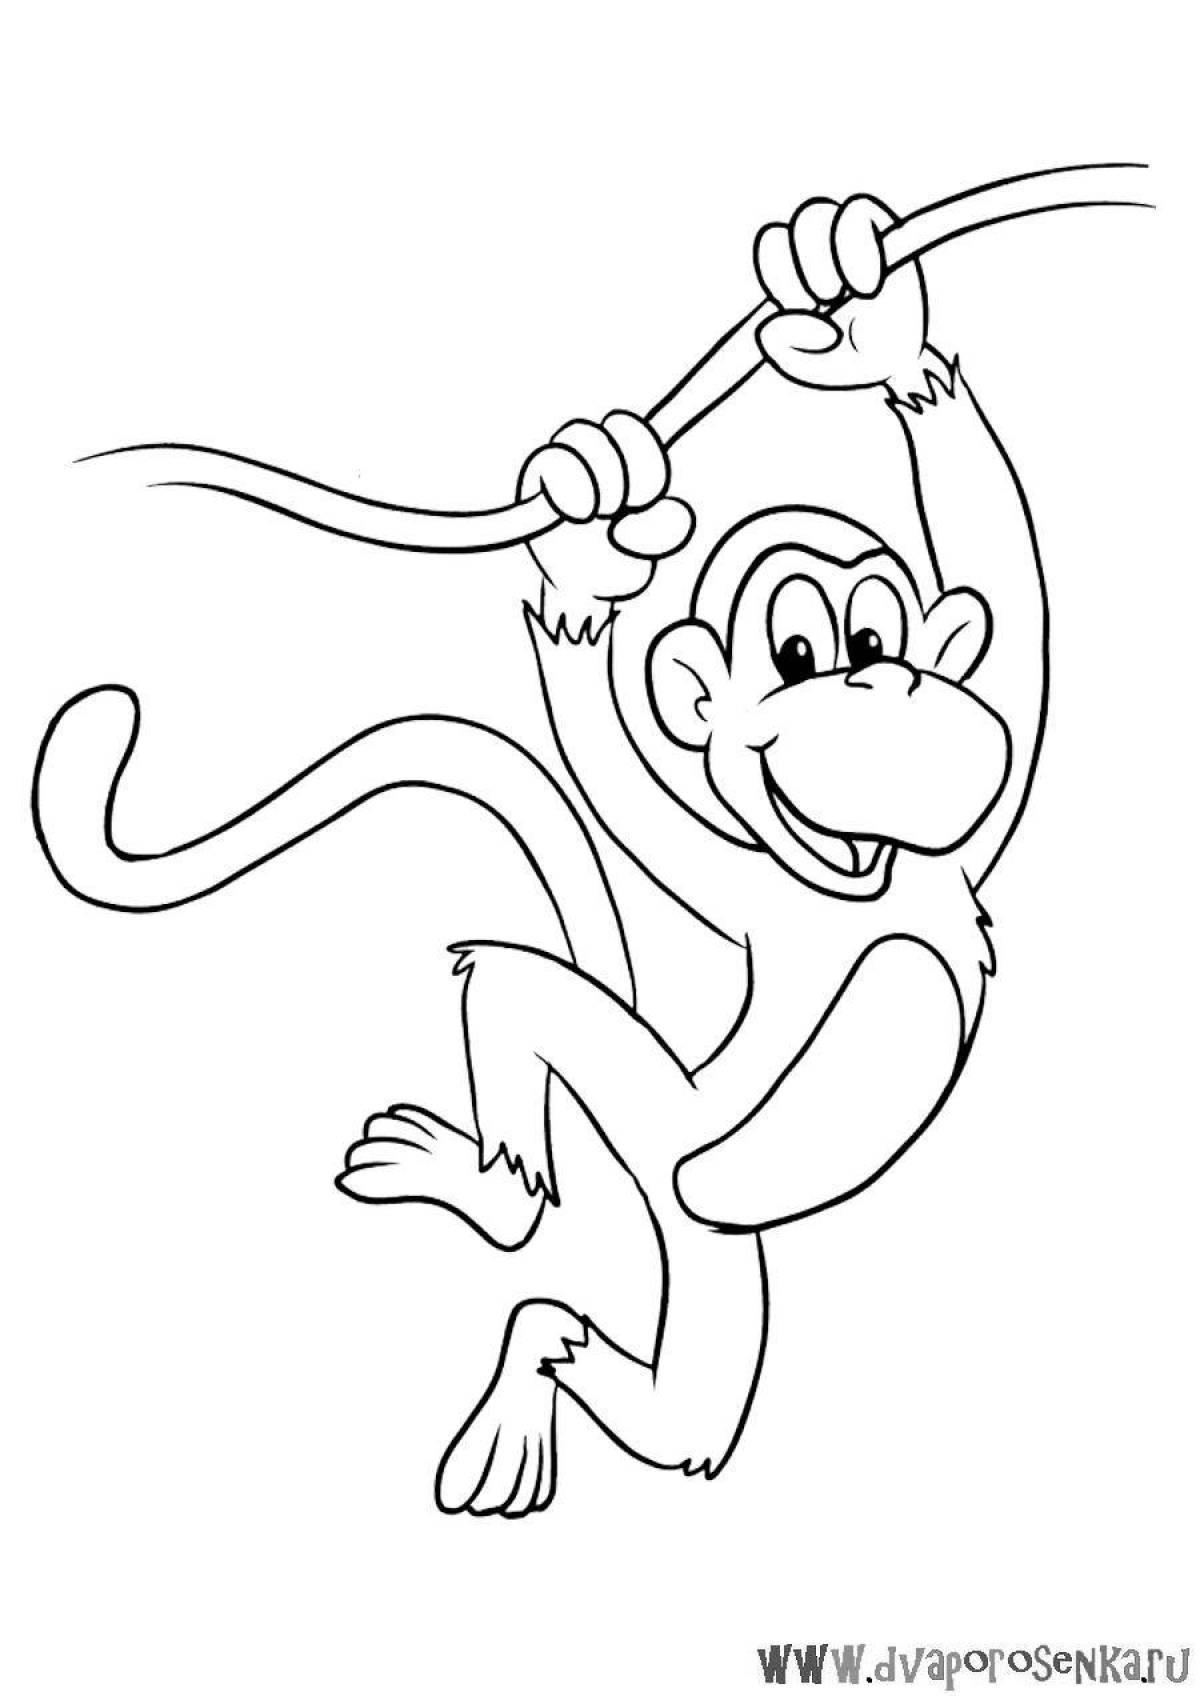 Impressive monkey coloring book for kids